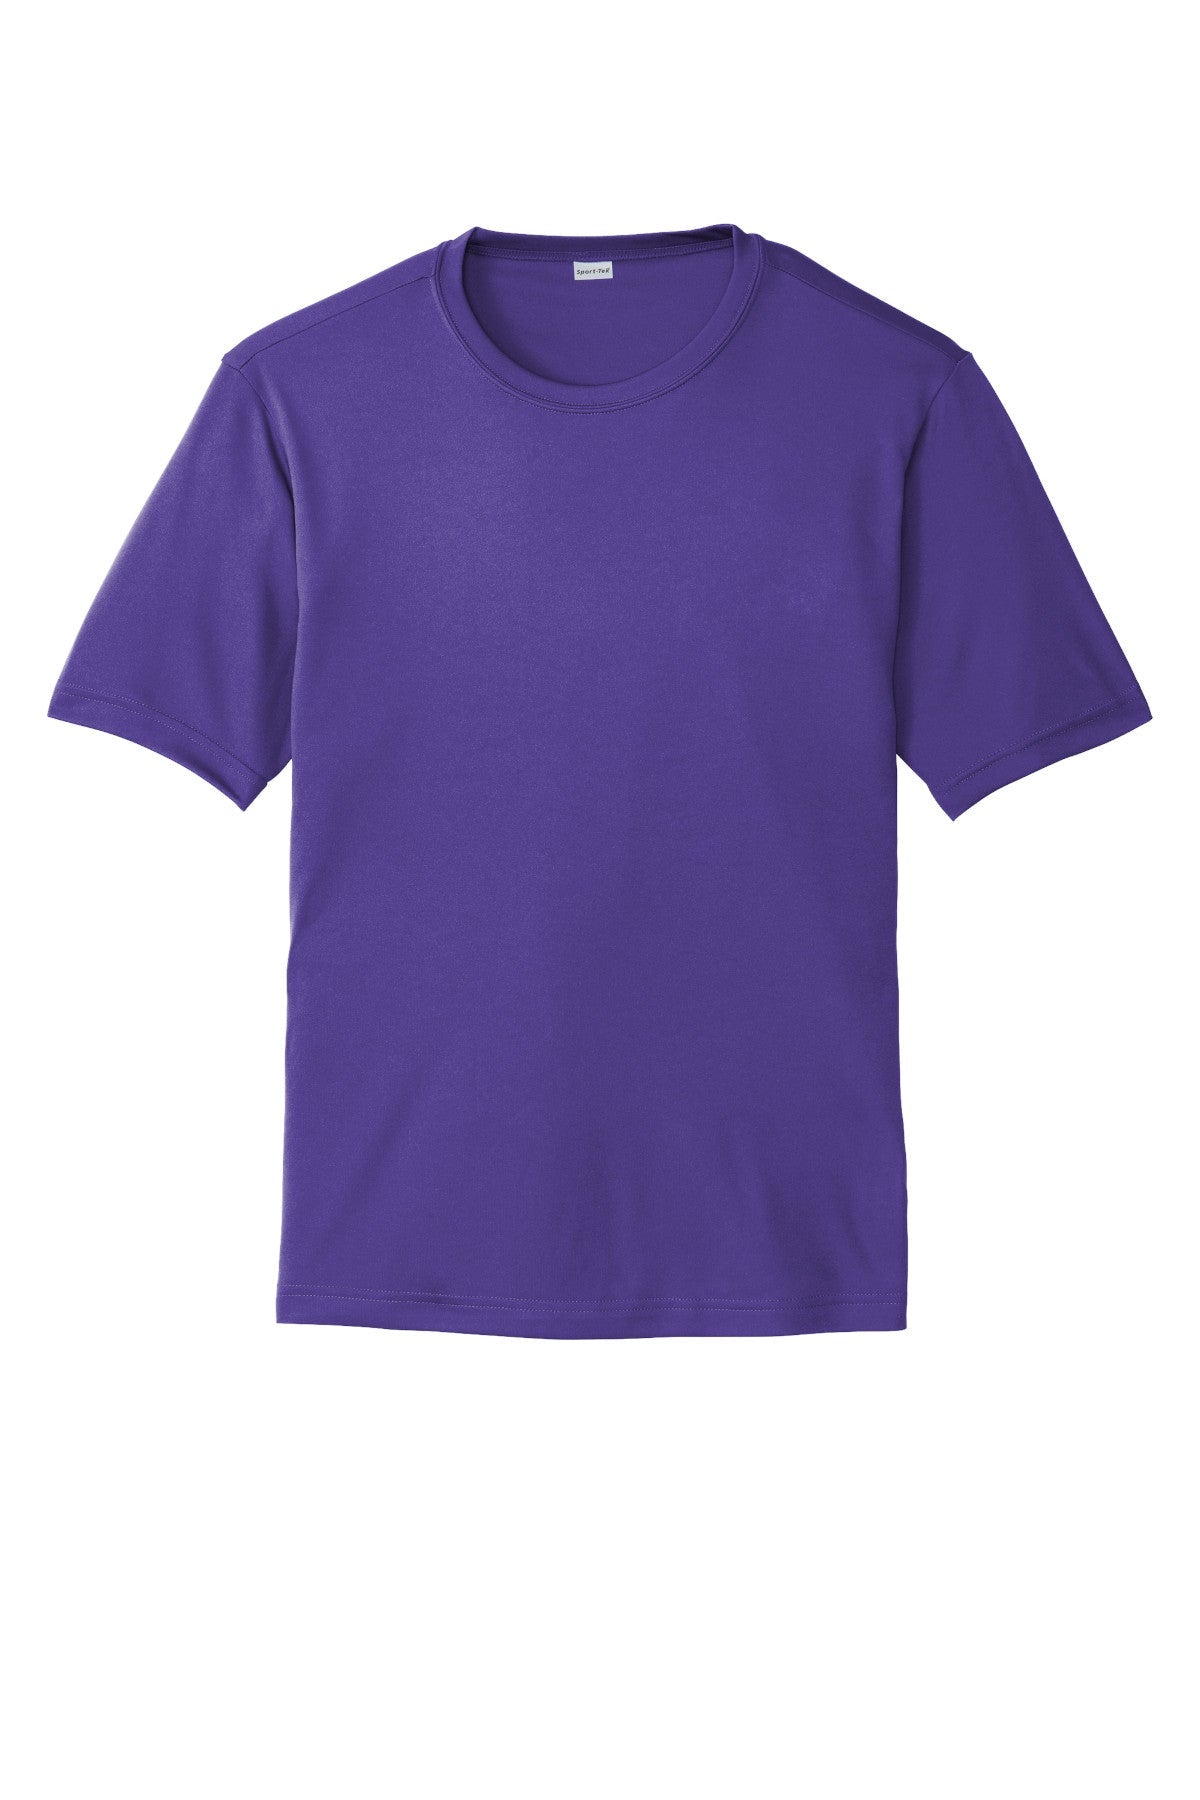 Sport-Tek St350 Polyester Adult T-Shirt Ad Small / Purple